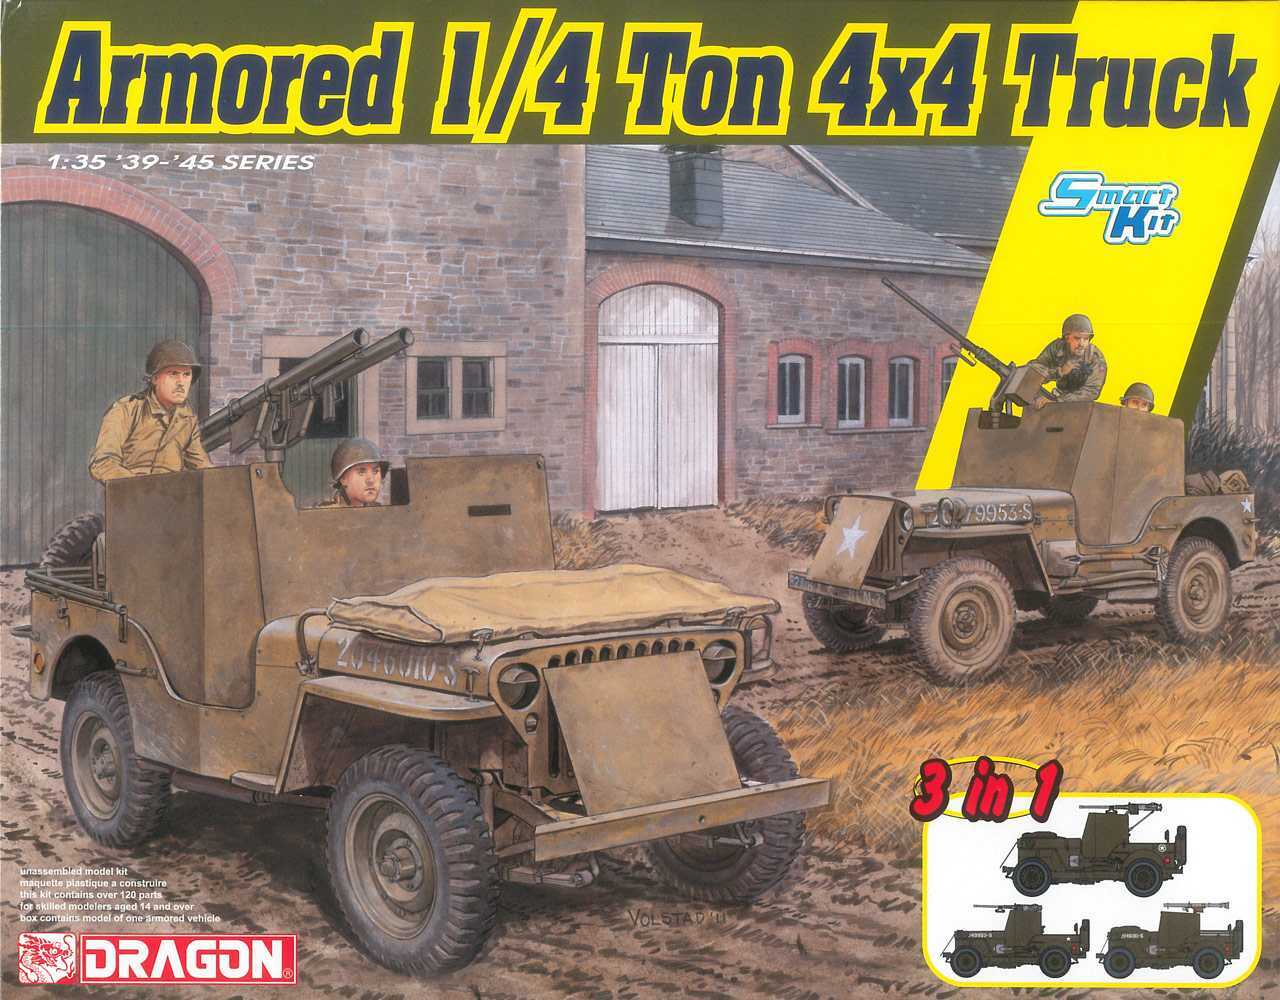 Model Kit military 6727 - Armored 1/4-Ton 4x4 Truck 3v1 (1:35)